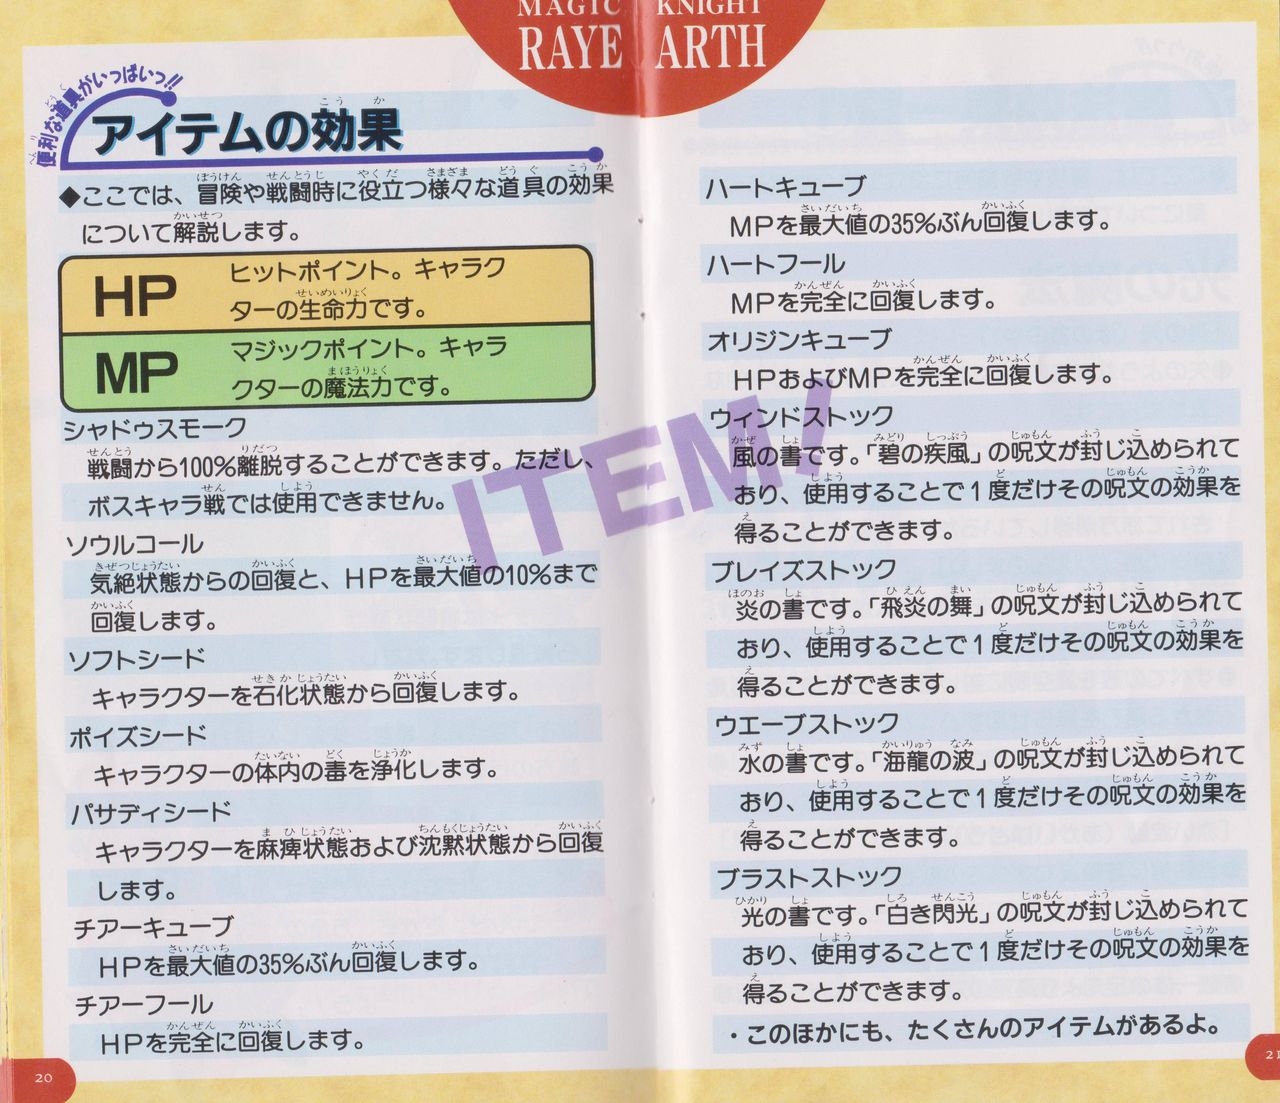 Magic Knight Rayearth - Box & Manual Scans [Super Famicom] 13